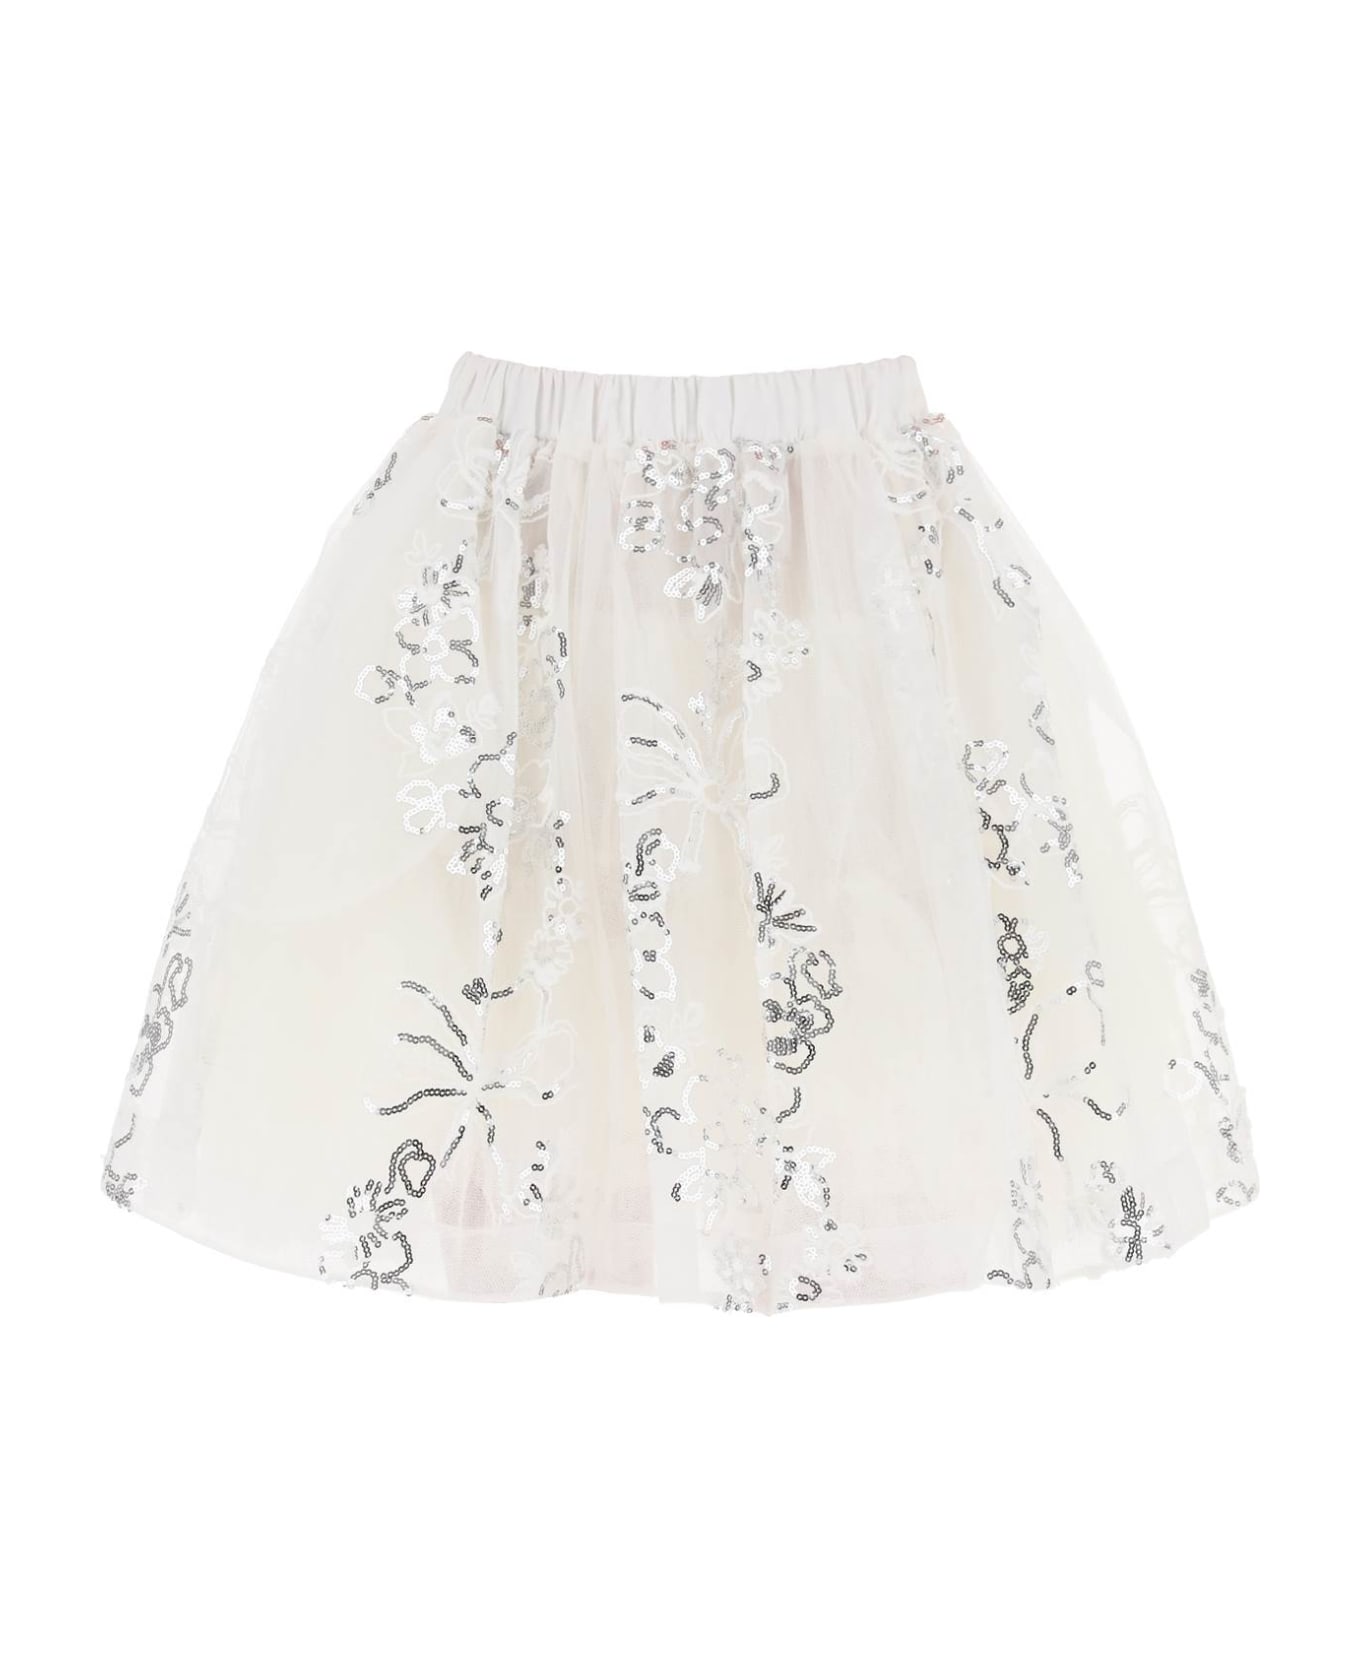 Simone Rocha Embroidered Tutu Skirt - IVORY WHITE SILVER (White)